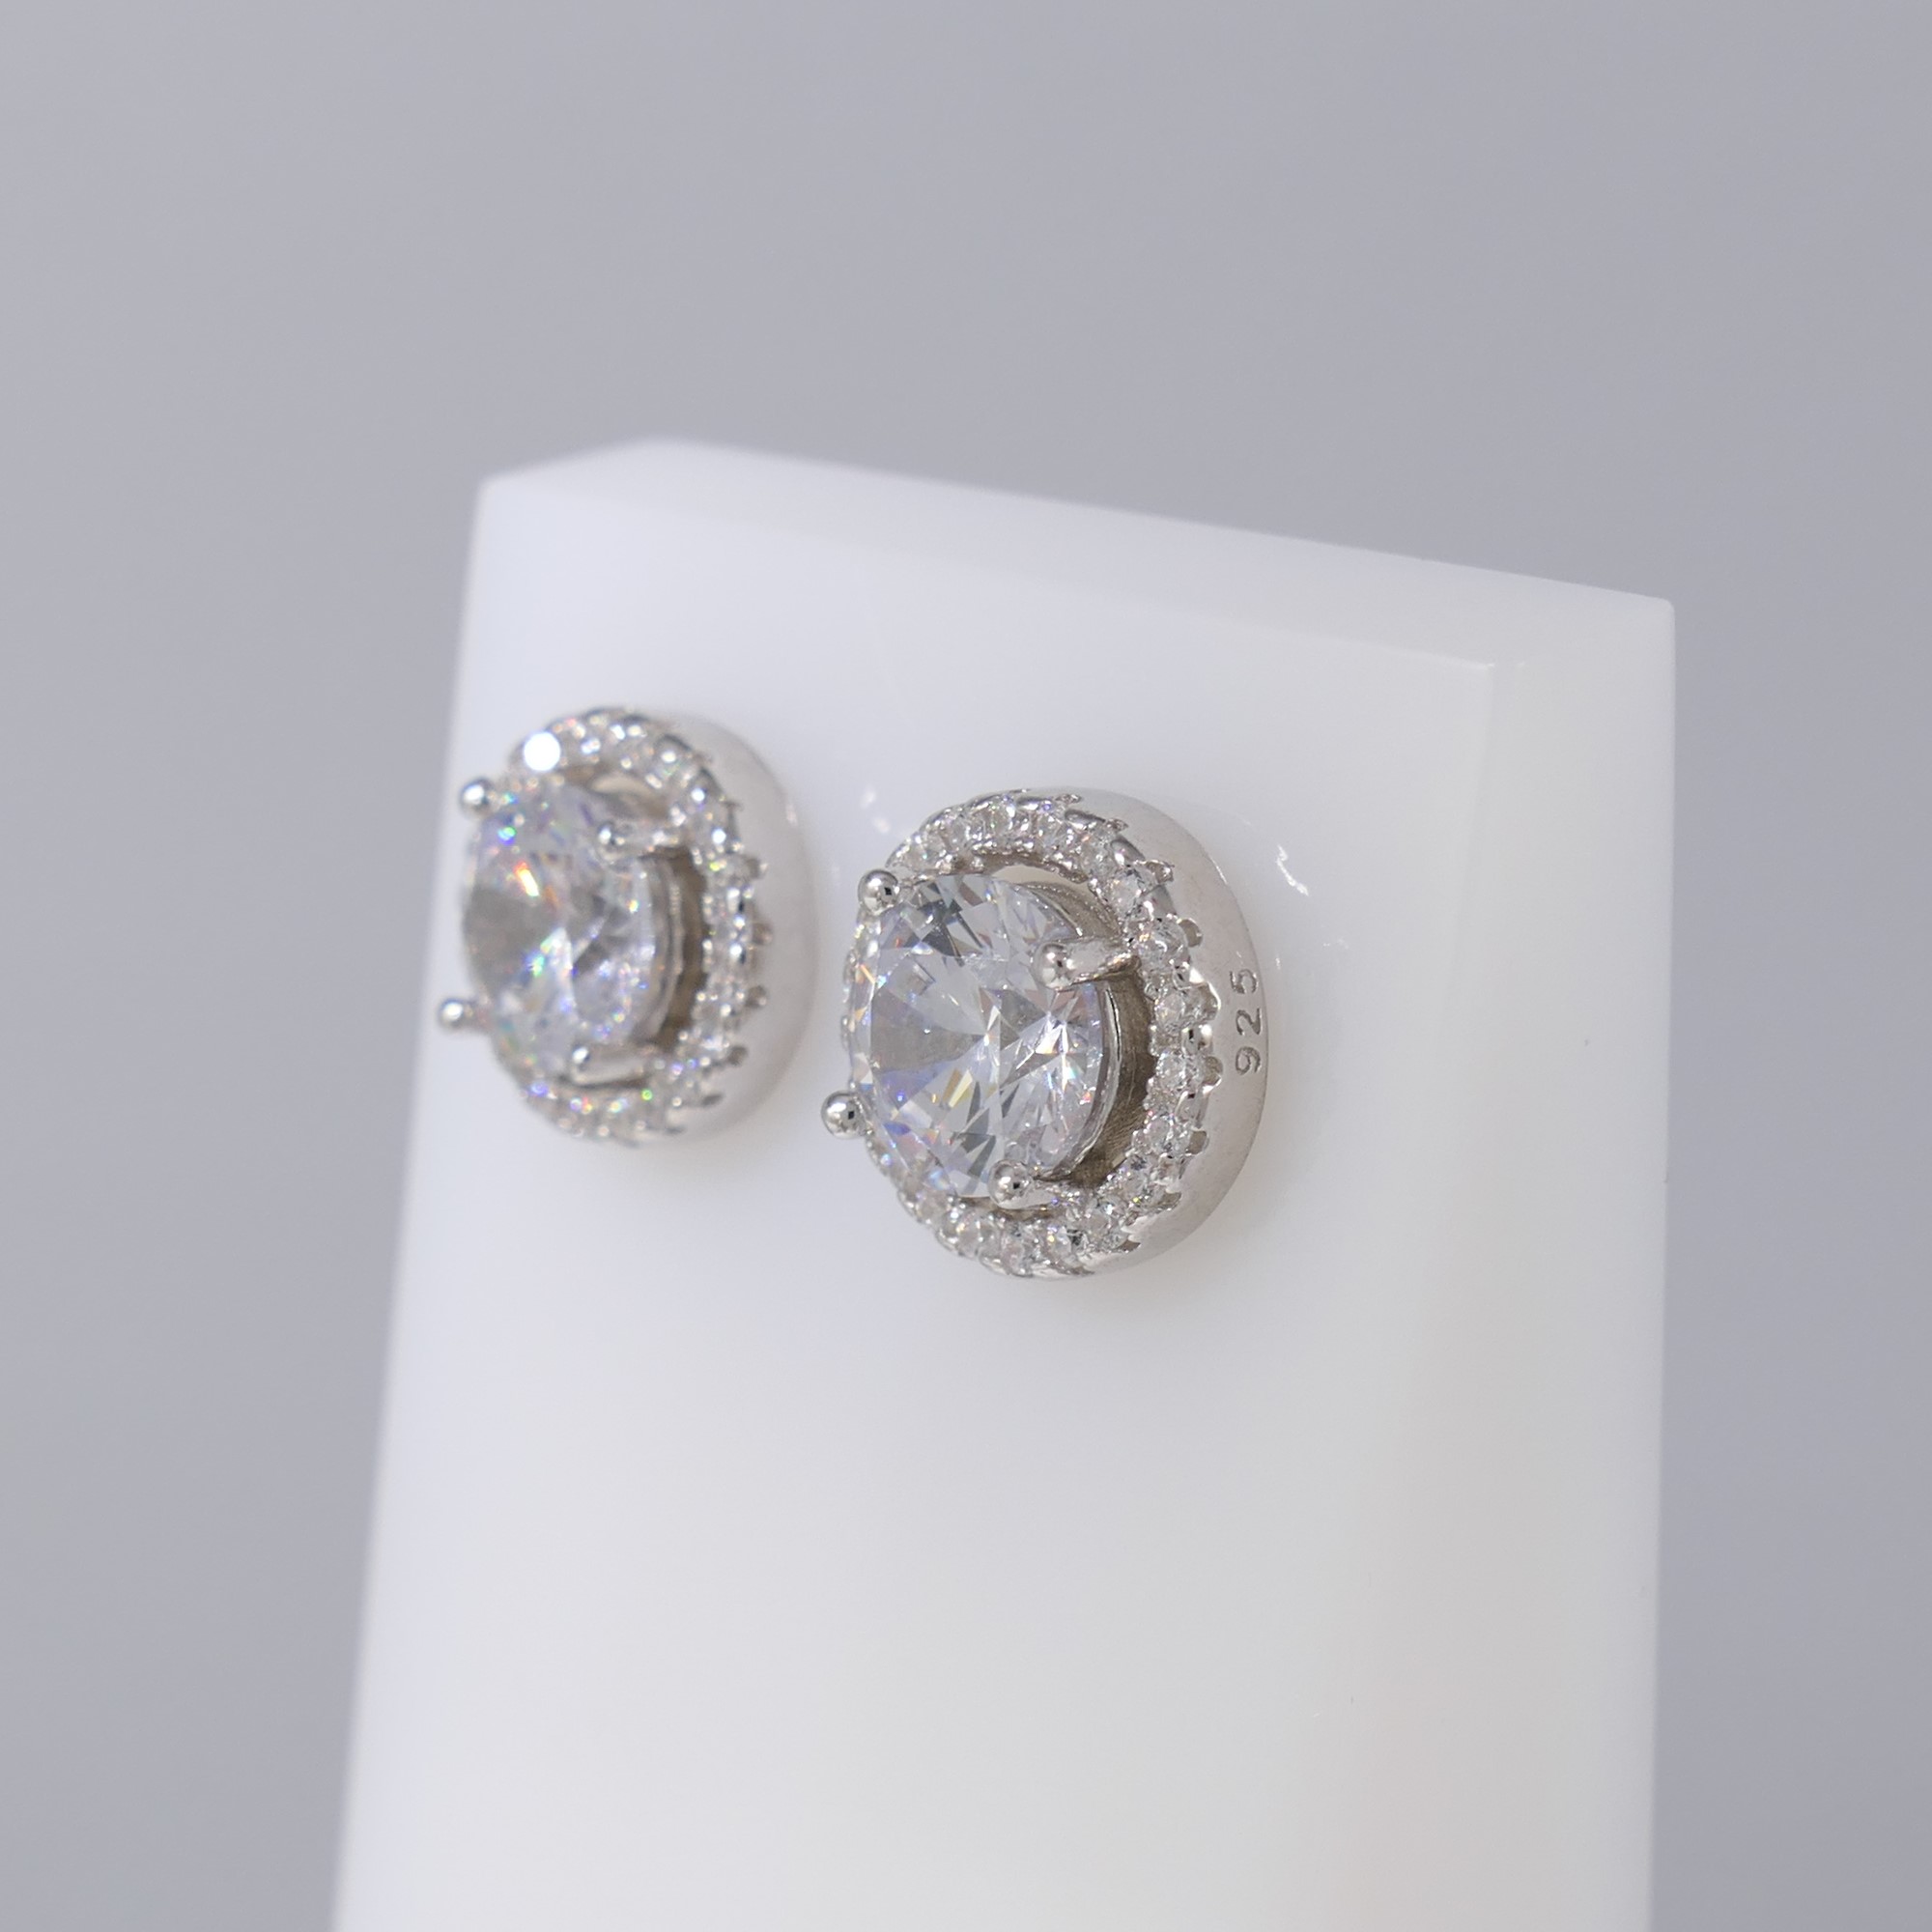 Pair of sterling silver halo stud earrings - Image 4 of 5